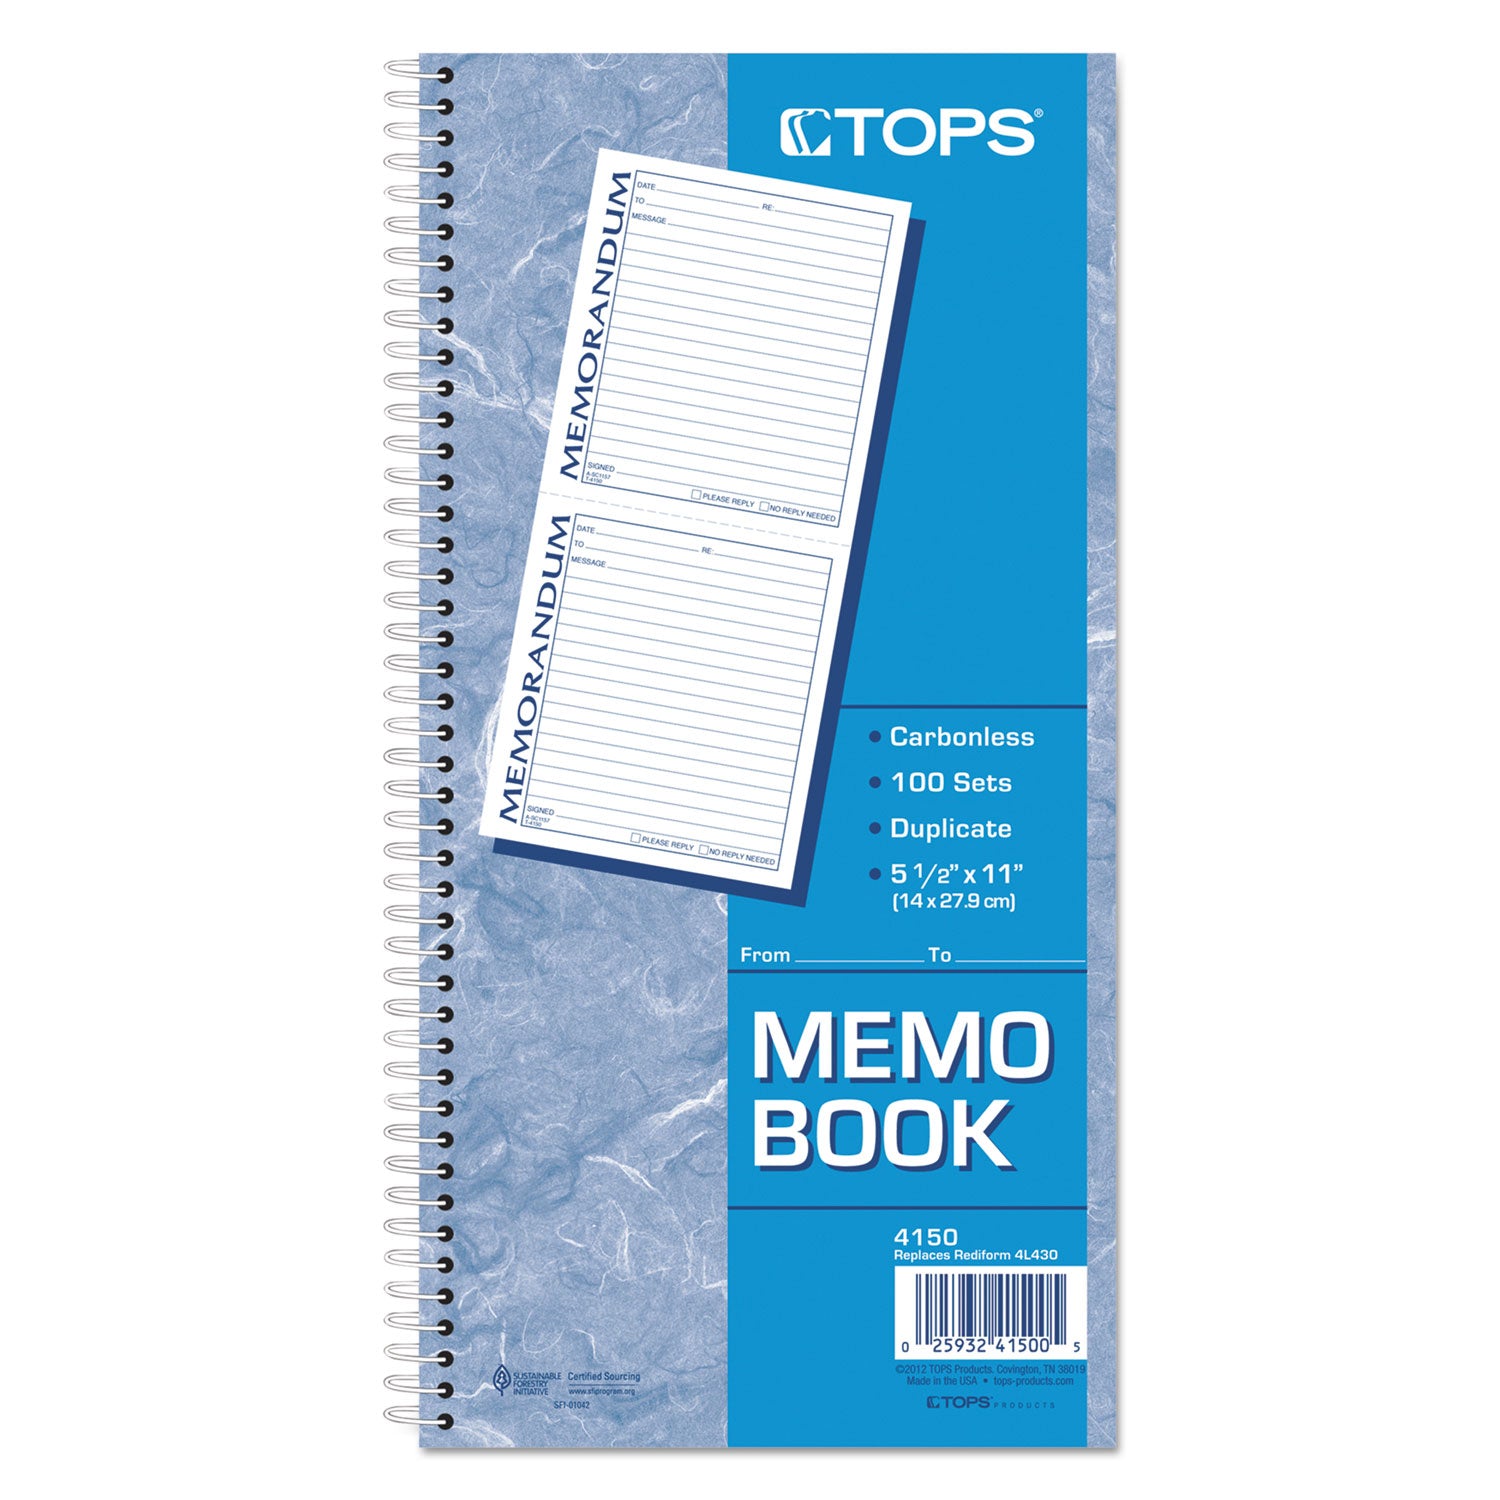 Memorandum Book, Two-Part Carbonless, 5.5 x 5, 2 Forms/Sheet, 100 Forms Total - 